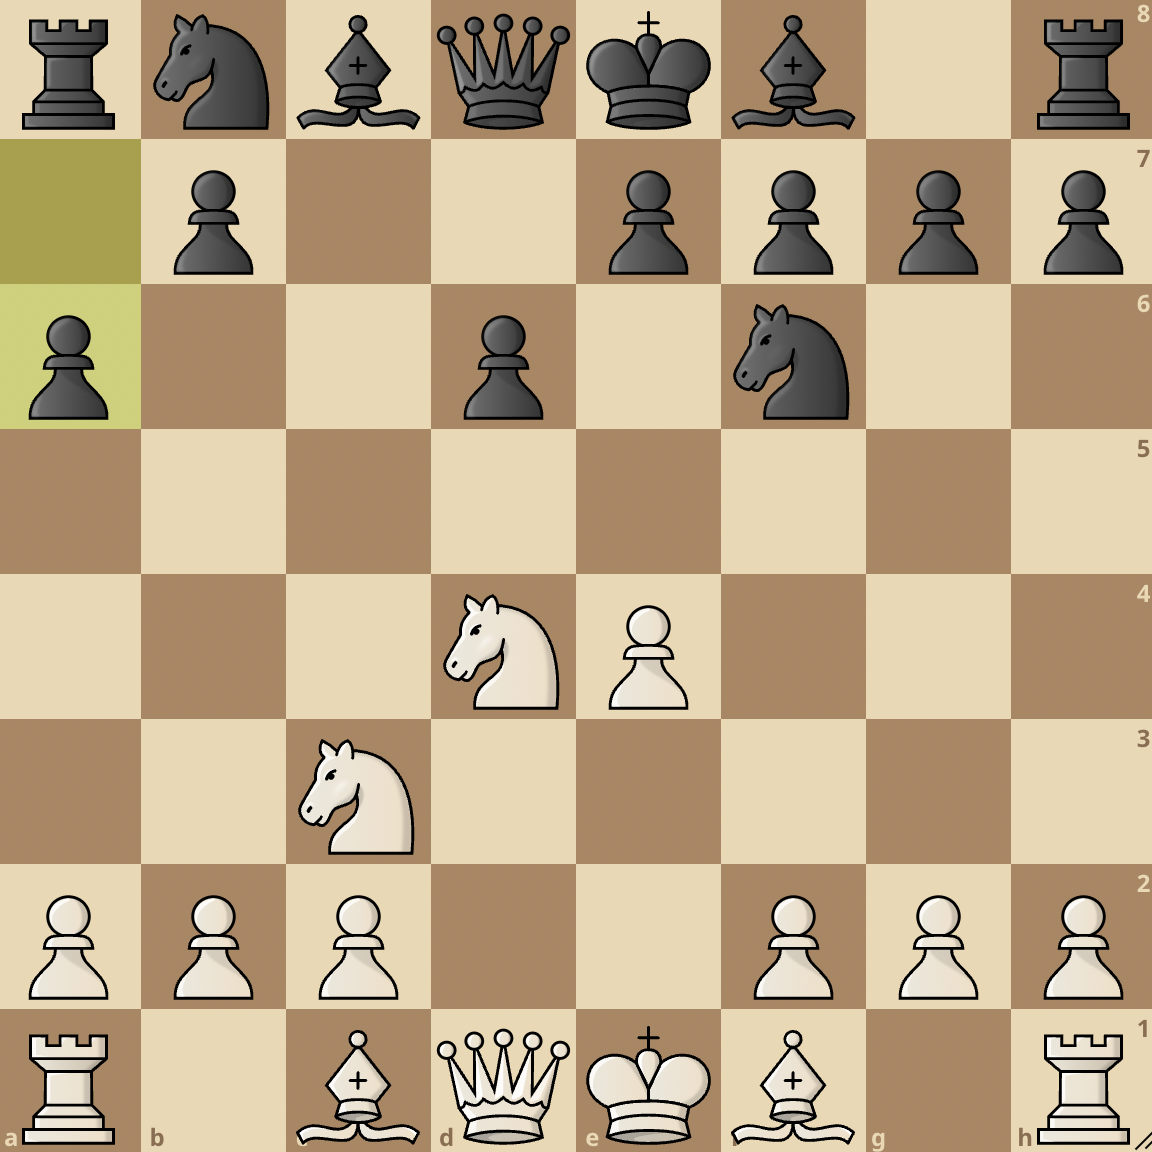 Najdorf Variation: 1. e4 c5 2. Nf3 d6 3. d4 cxd4 4. Nxd4 Nf6 5. Nc3 a6